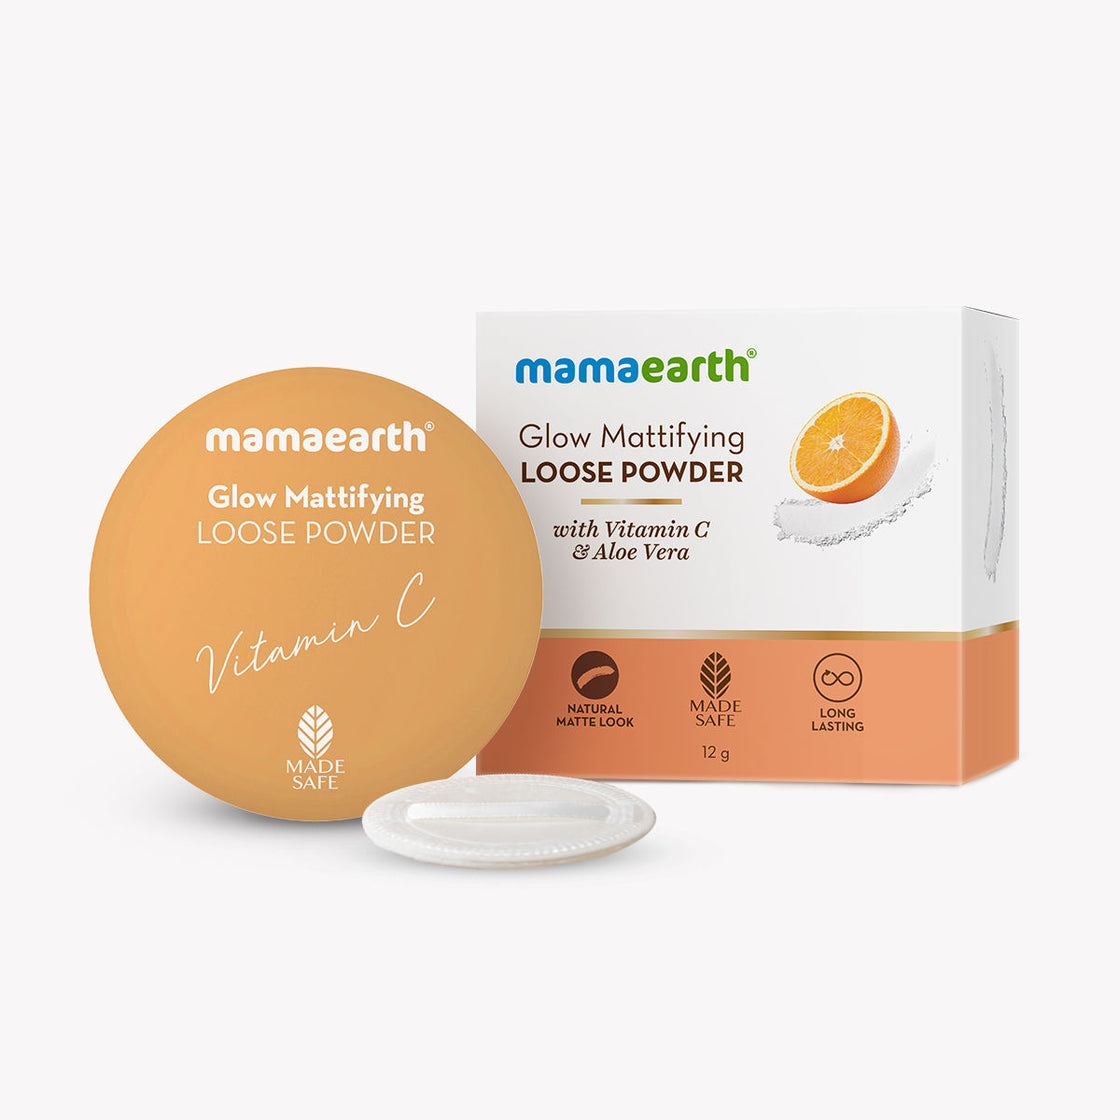 Mamaearth Glow Mattifying Loose Powder With Vitamin C & Aloe Vera For A Natural Matte Look